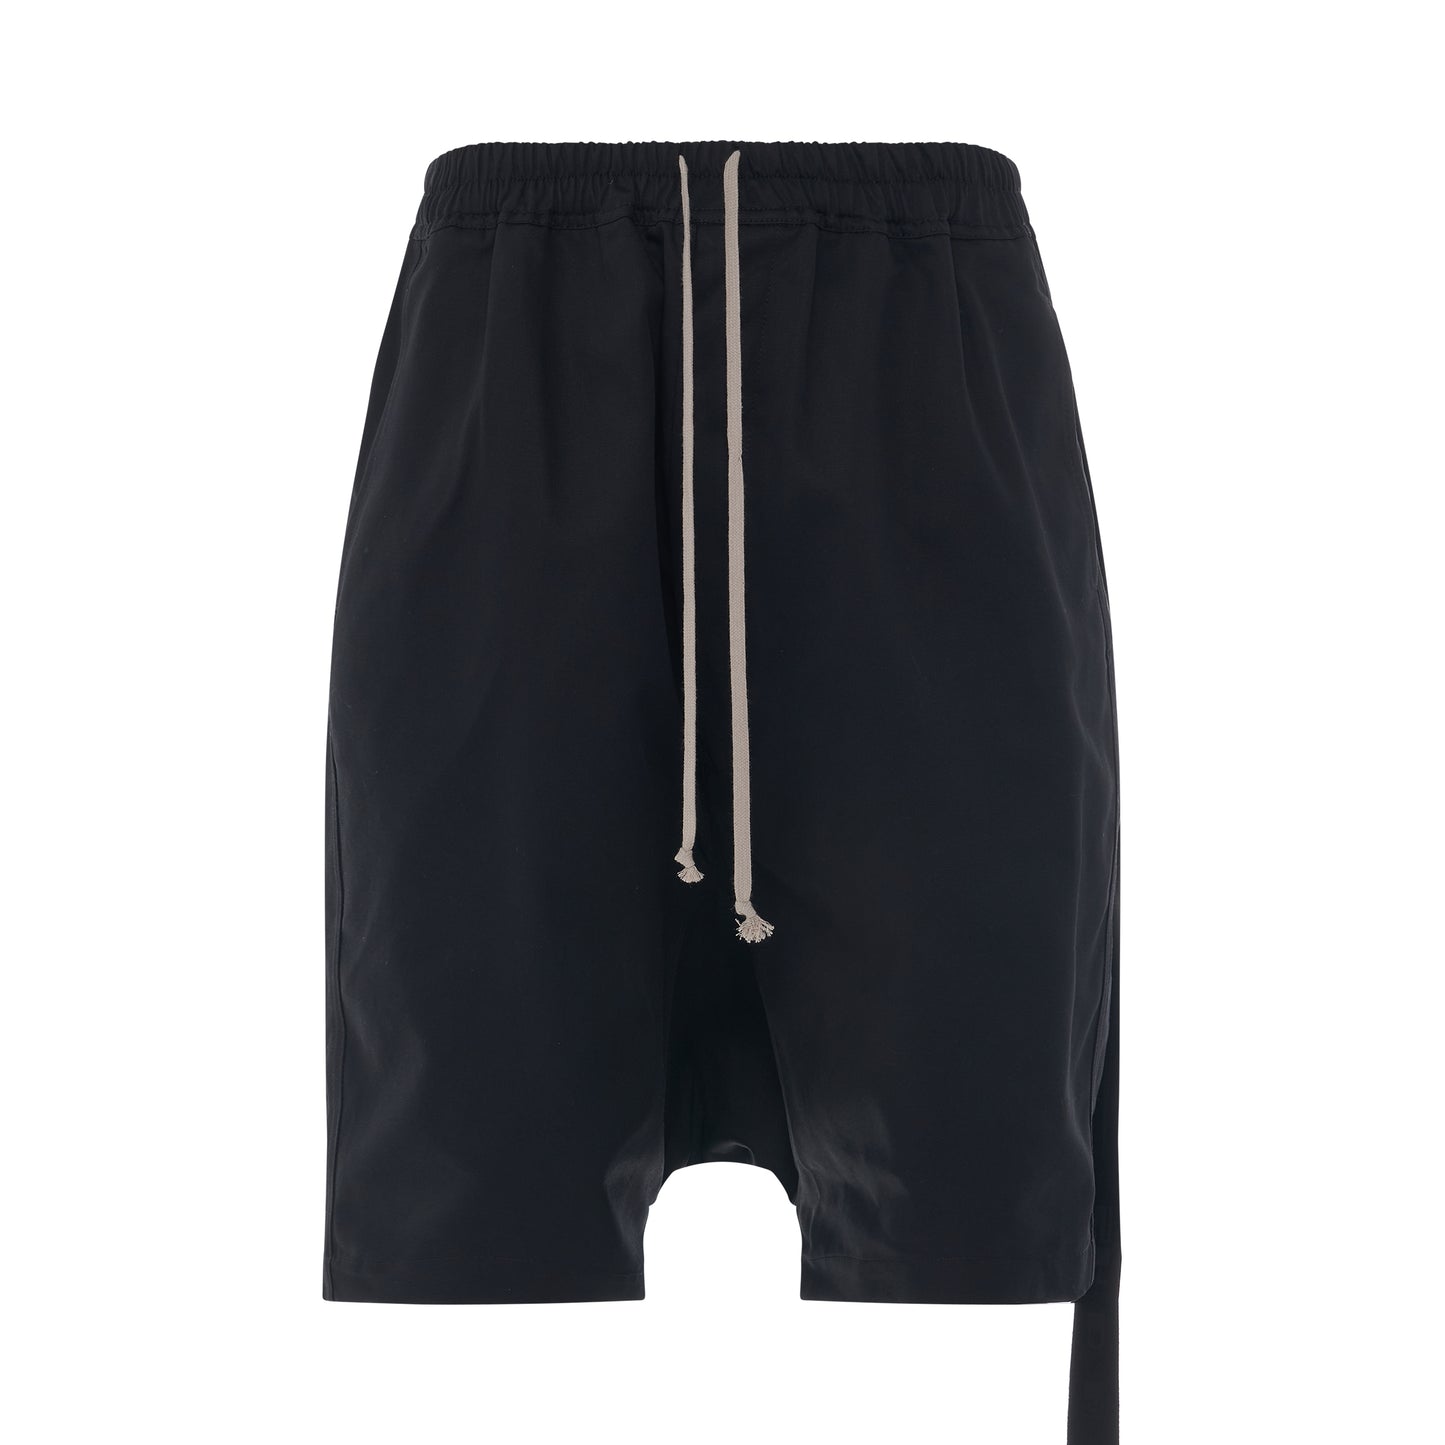 DRKSHDW Woven Drawstring Pods Shorts in Black